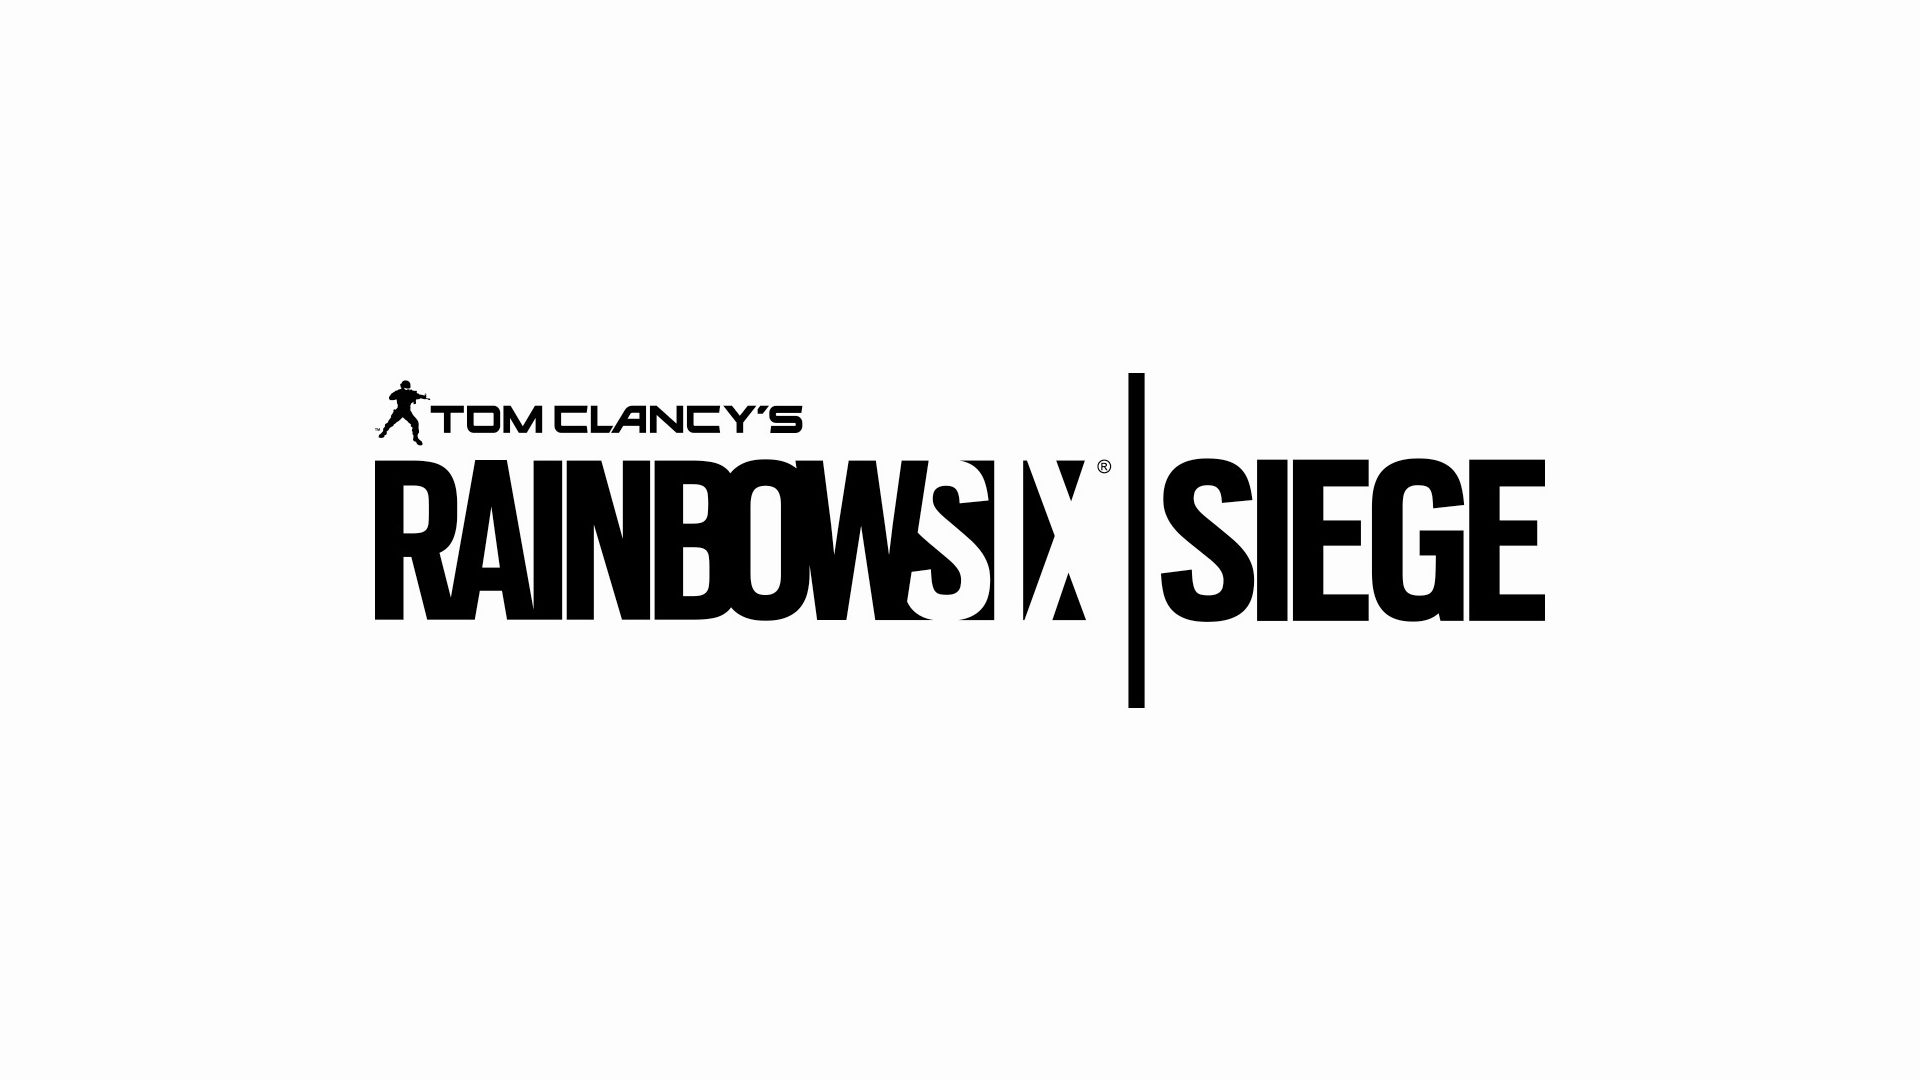 ÐžÐ¿ÐµÑ€Ð°Ñ‚Ð¸Ð²Ð½Ð¸ÐºÐ¸ Ð¿Ñ�Ñ‚Ð¾Ð³Ð¾ Ð³Ð¾Ð´Ð° Ð¾Ð±Ð½Ð¾Ð²Ð»ÐµÐ½Ð¸Ð¹ Ð¸Ð· Rainbow Six Siege.